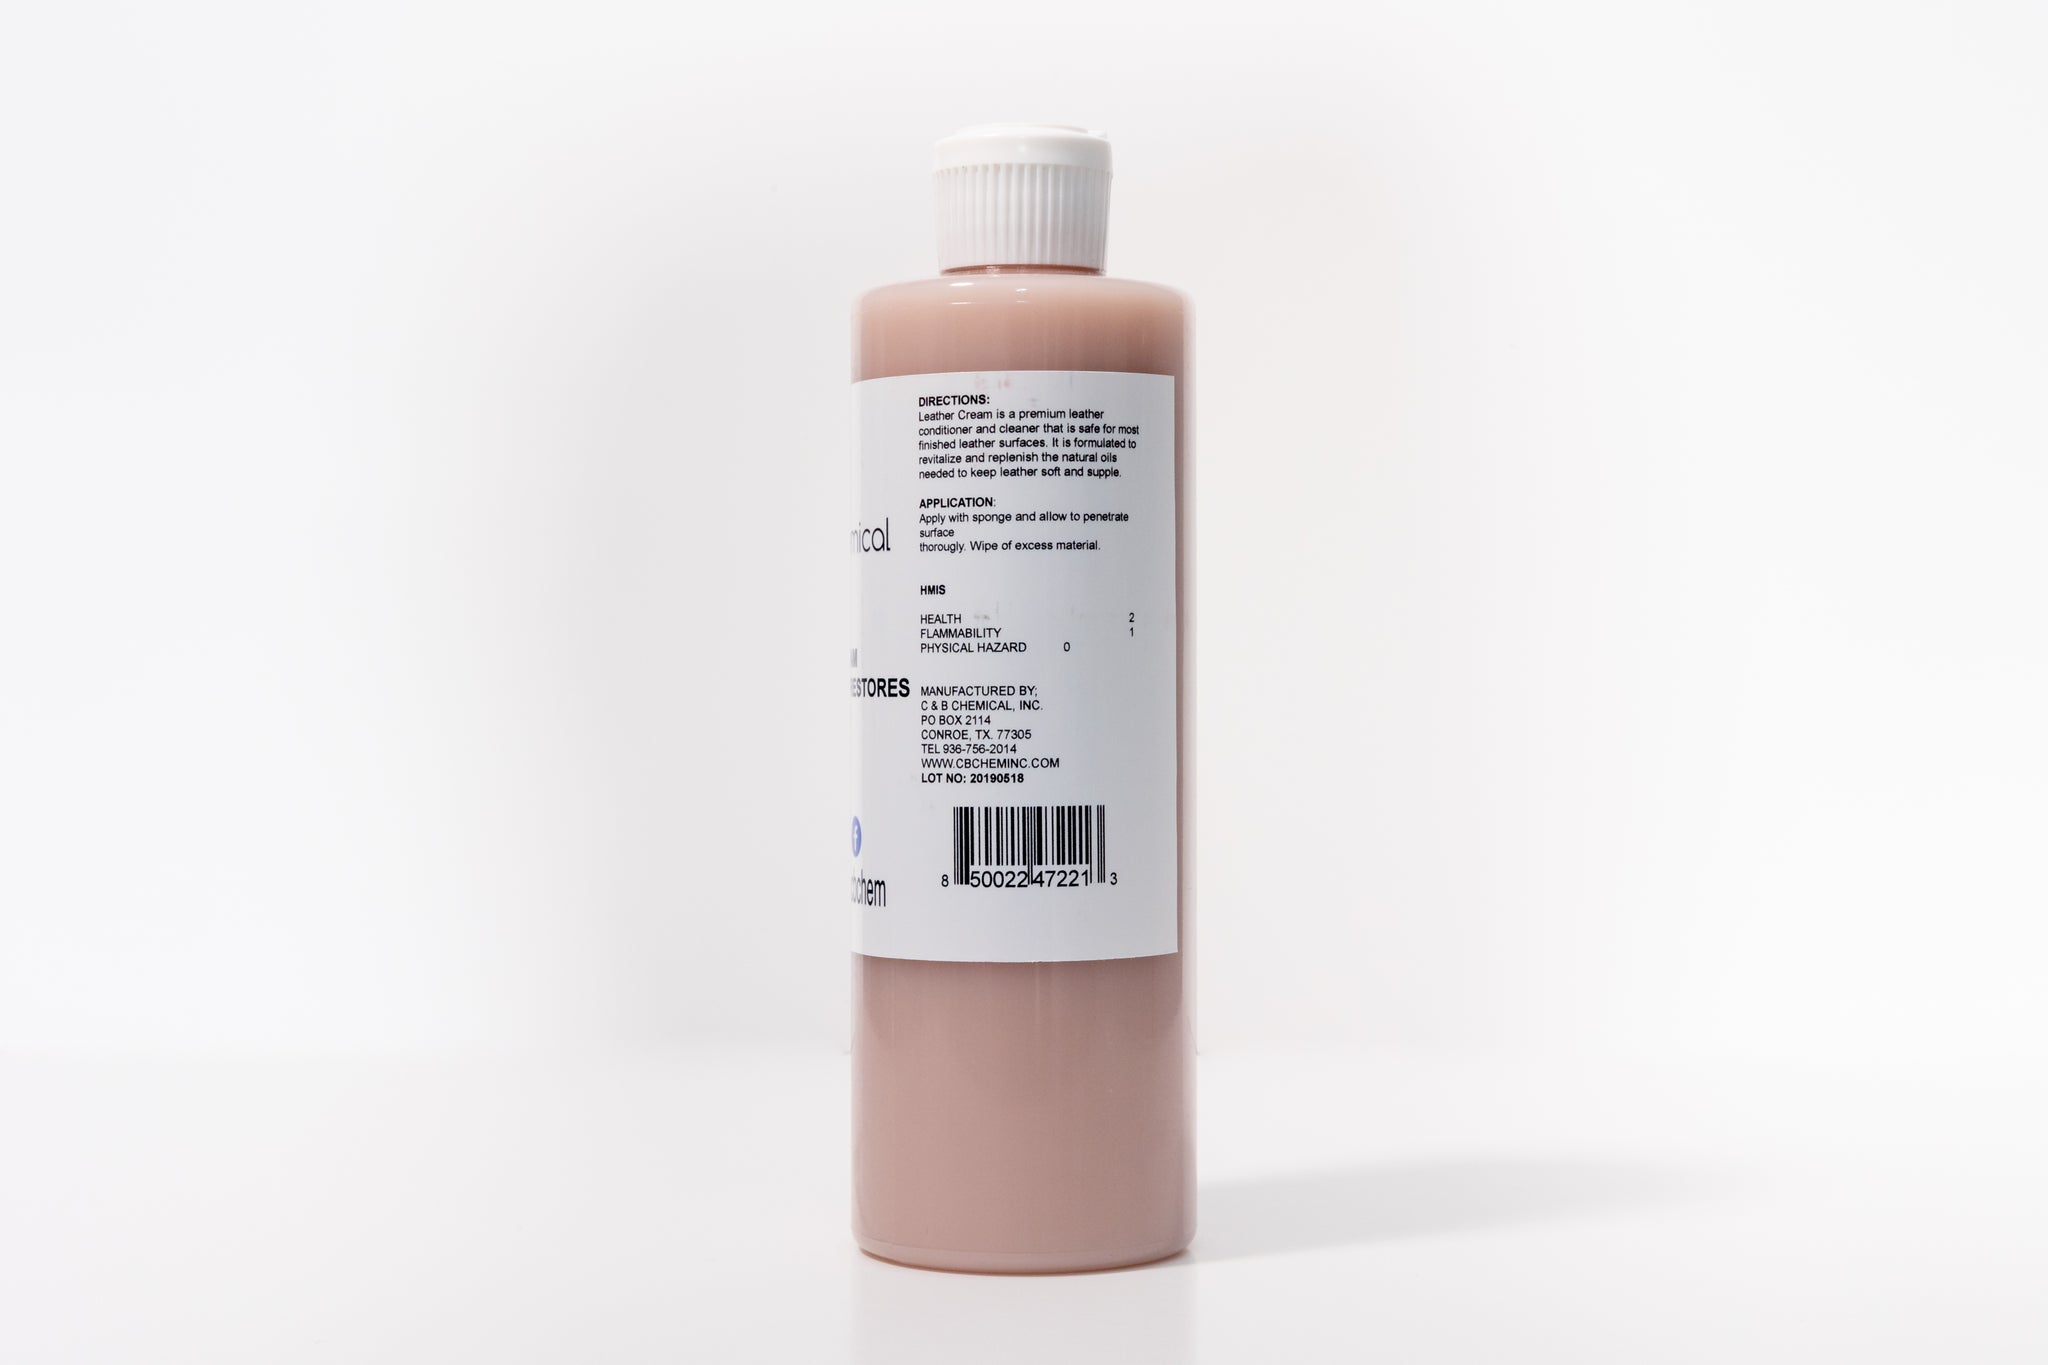 Leather Cream - C & B Chemical, Inc